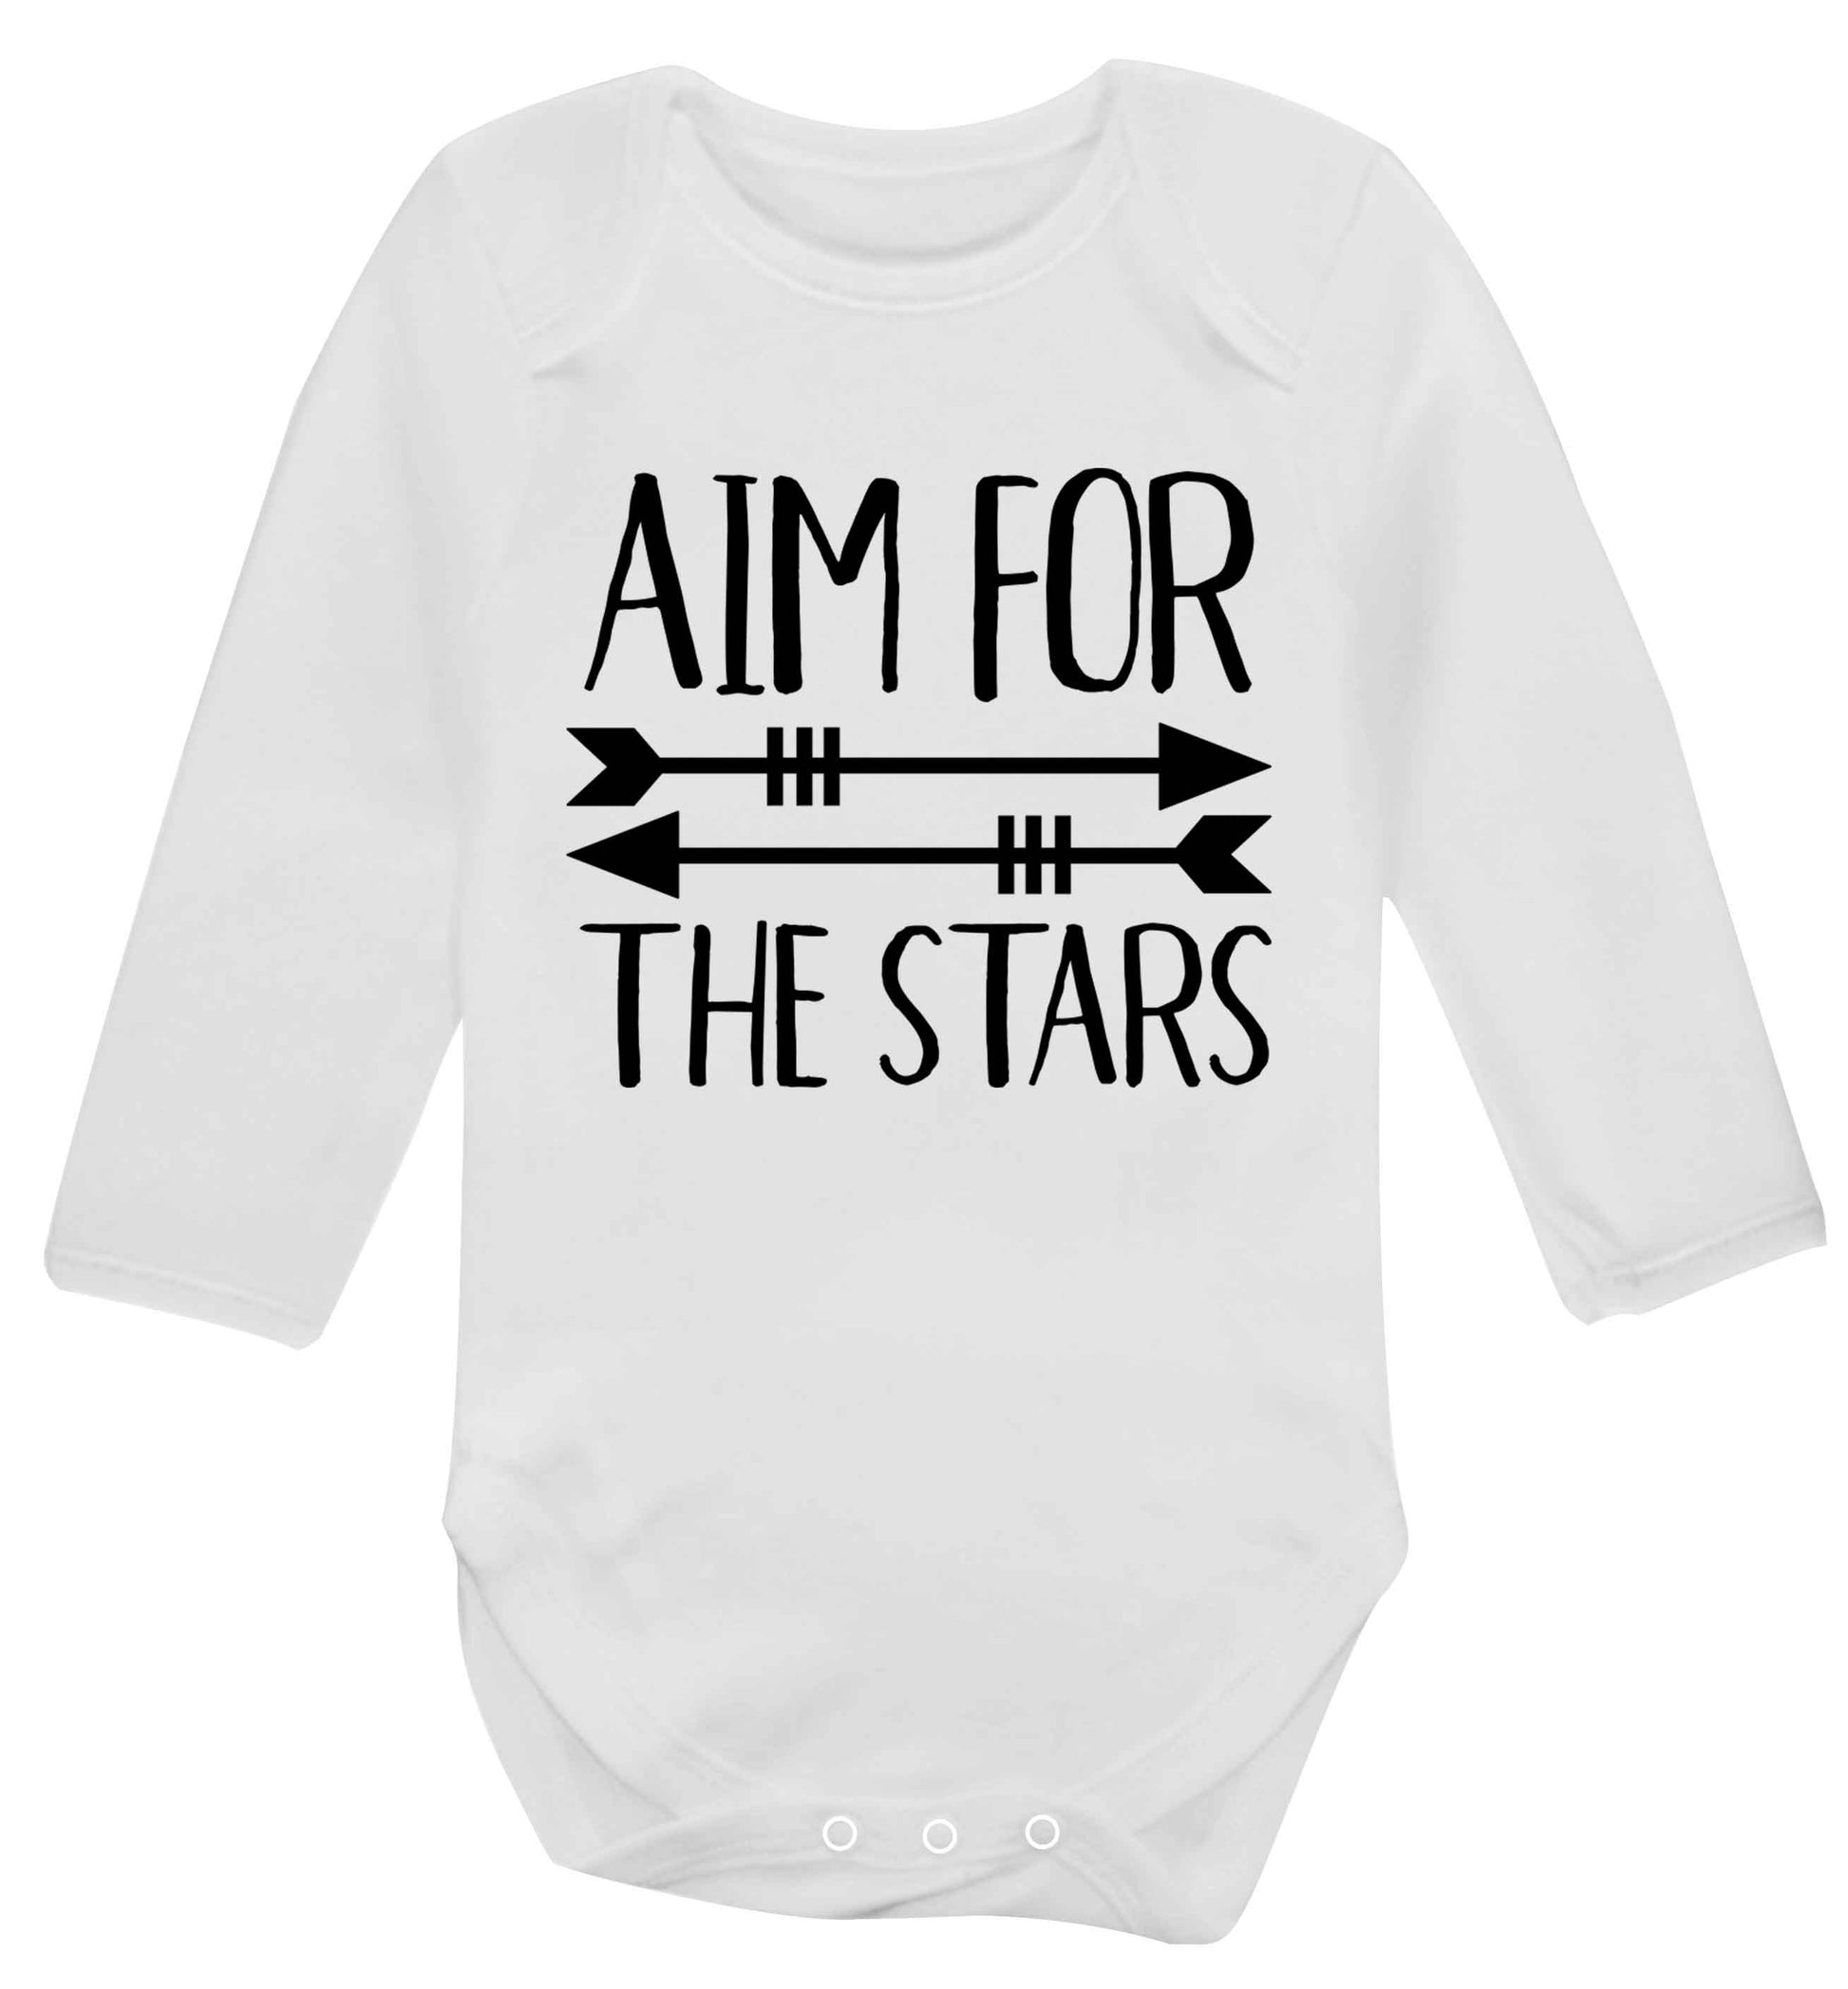 Aim for the stars Baby Vest long sleeved white 6-12 months